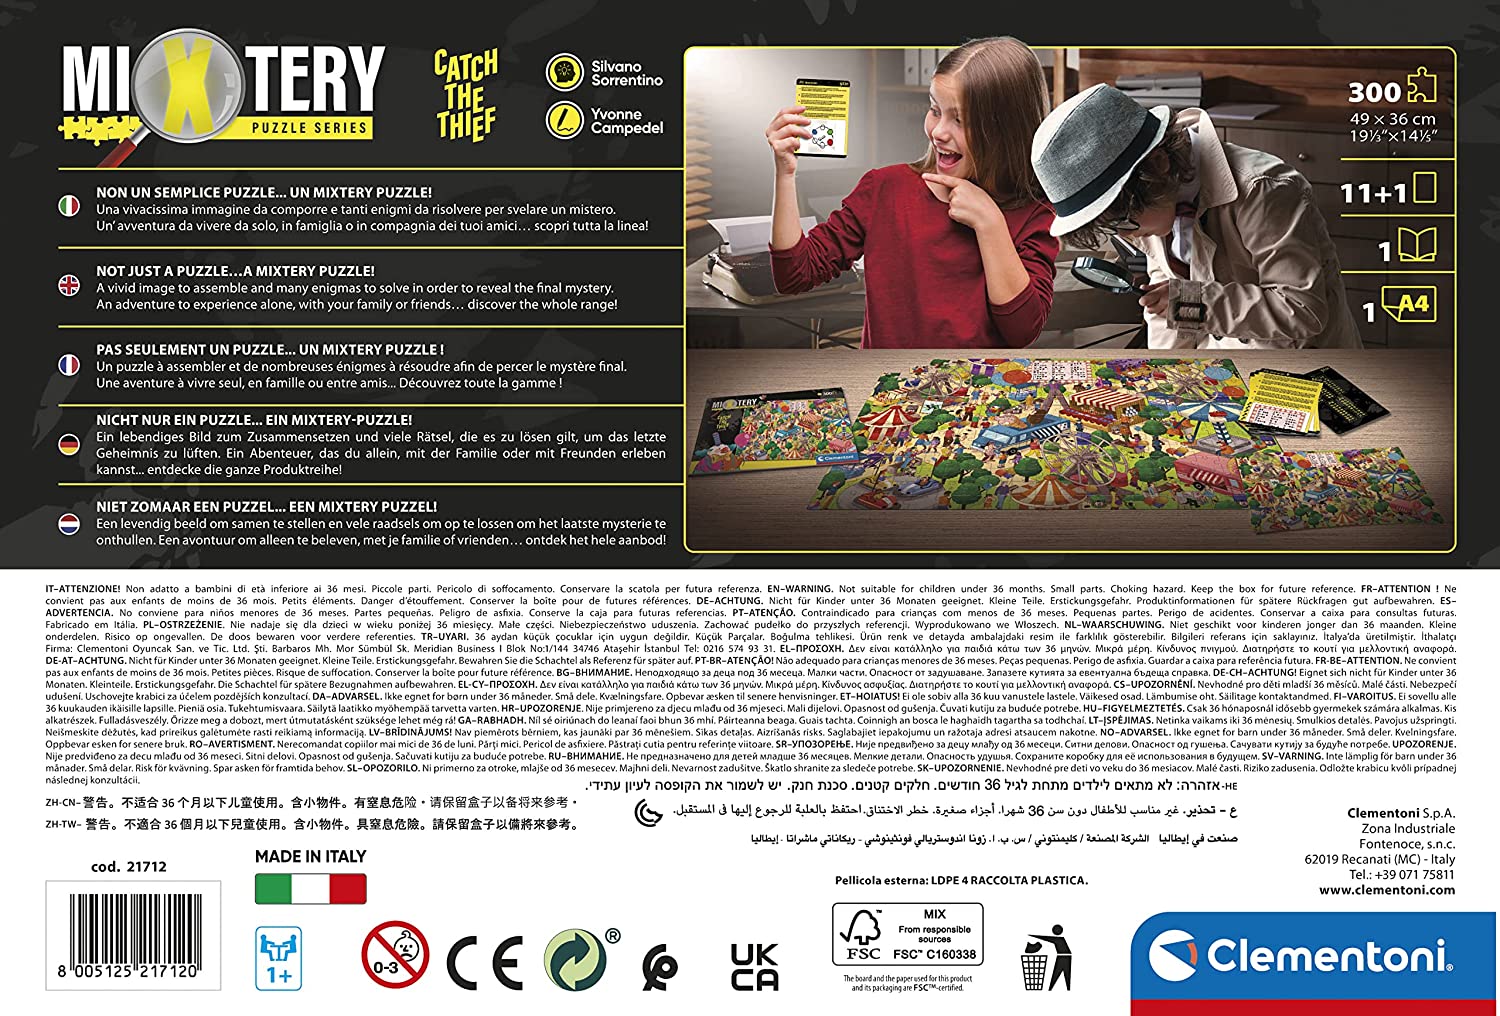 Mystery Puzzle - Catch the Thief - 300 pezzi CLEMENTONI toysvaldichiana.it 